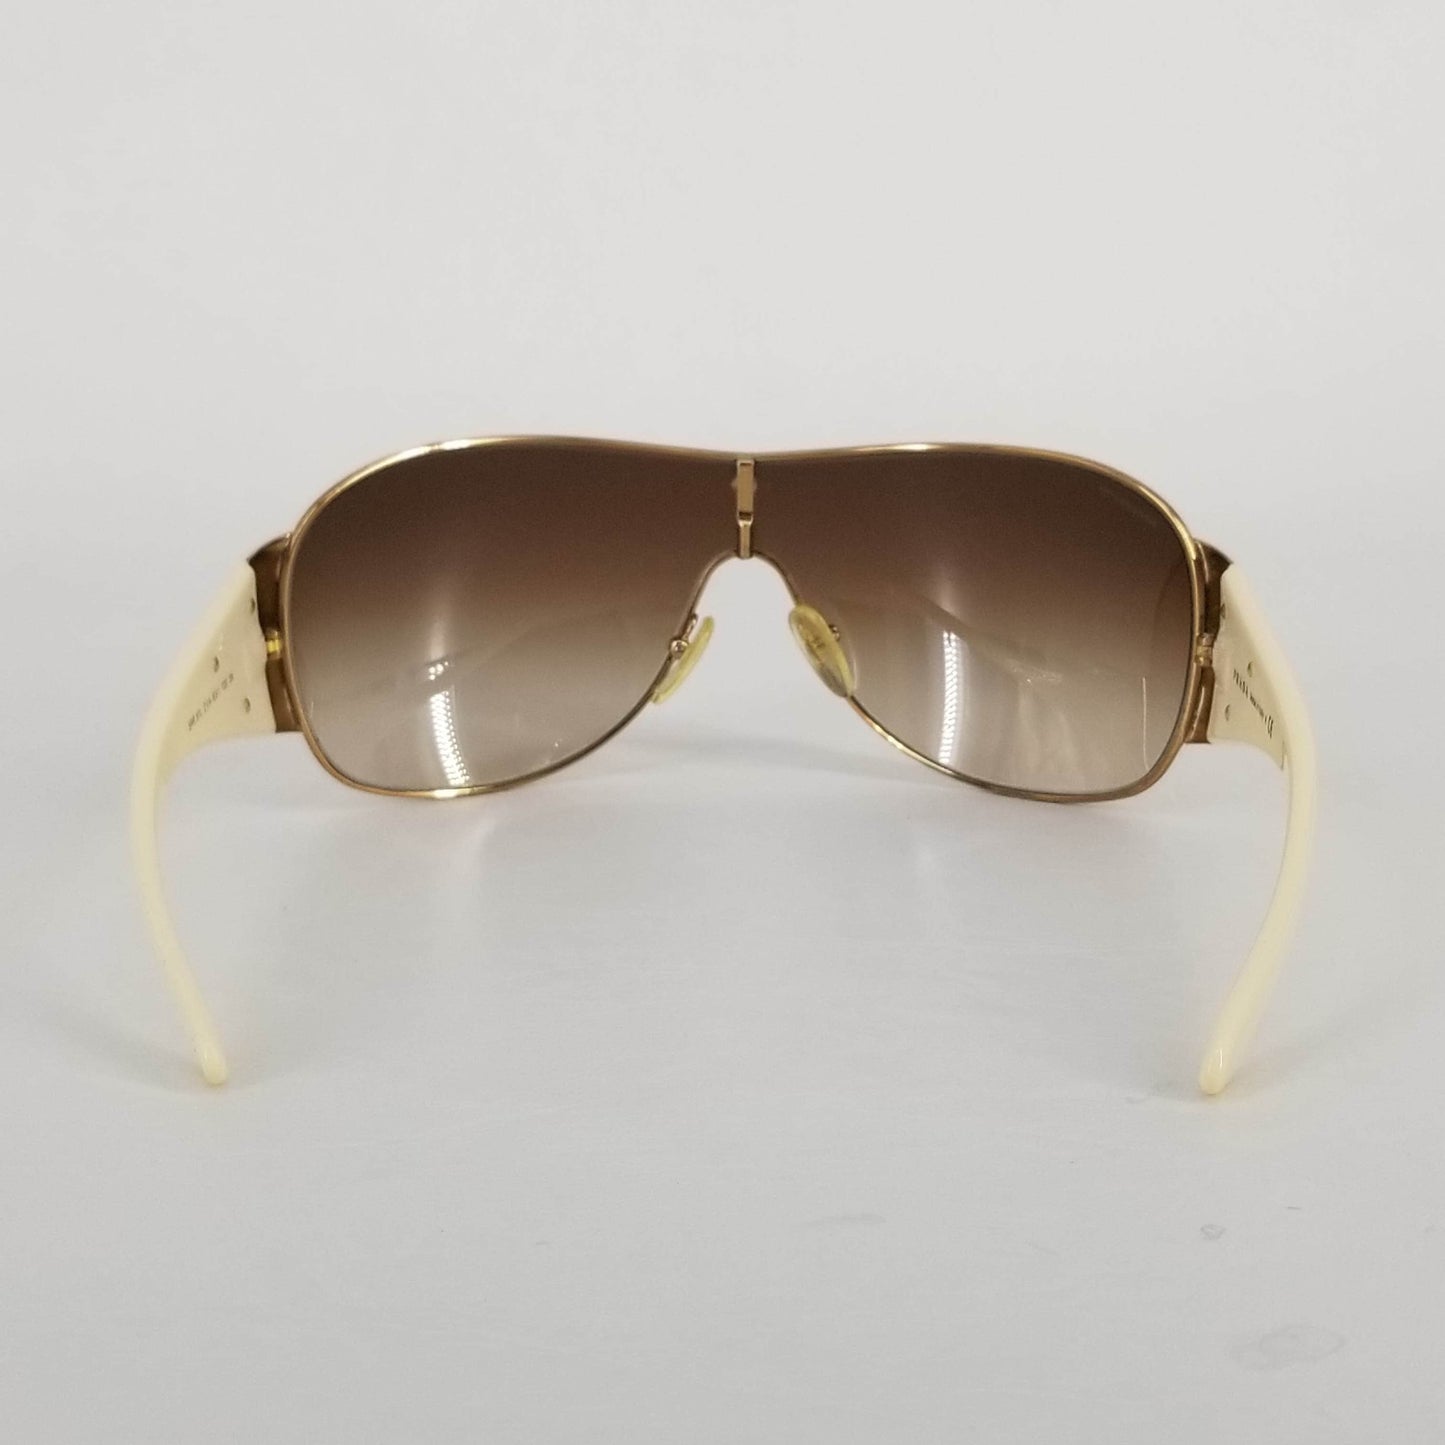 Authentic Prada Cream and Bronze Wrap Shield Sunglasses SPR57L